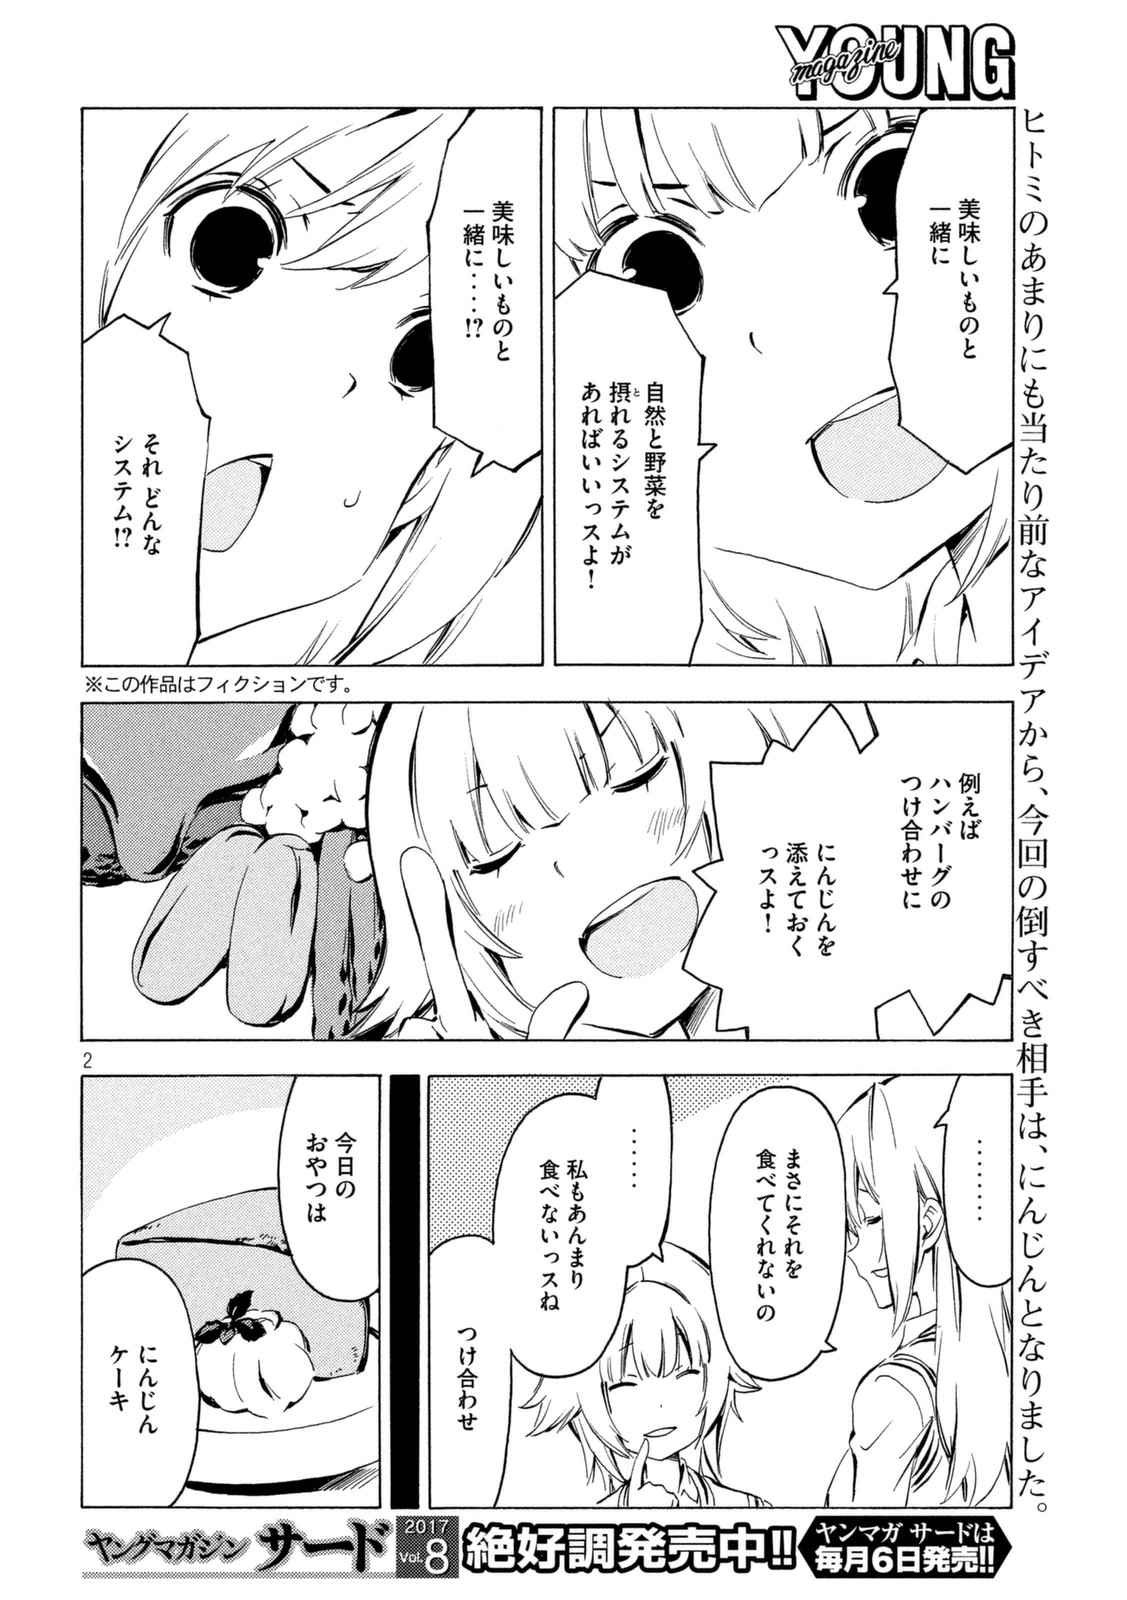 Minami-ke - Chapter 321 - Page 2